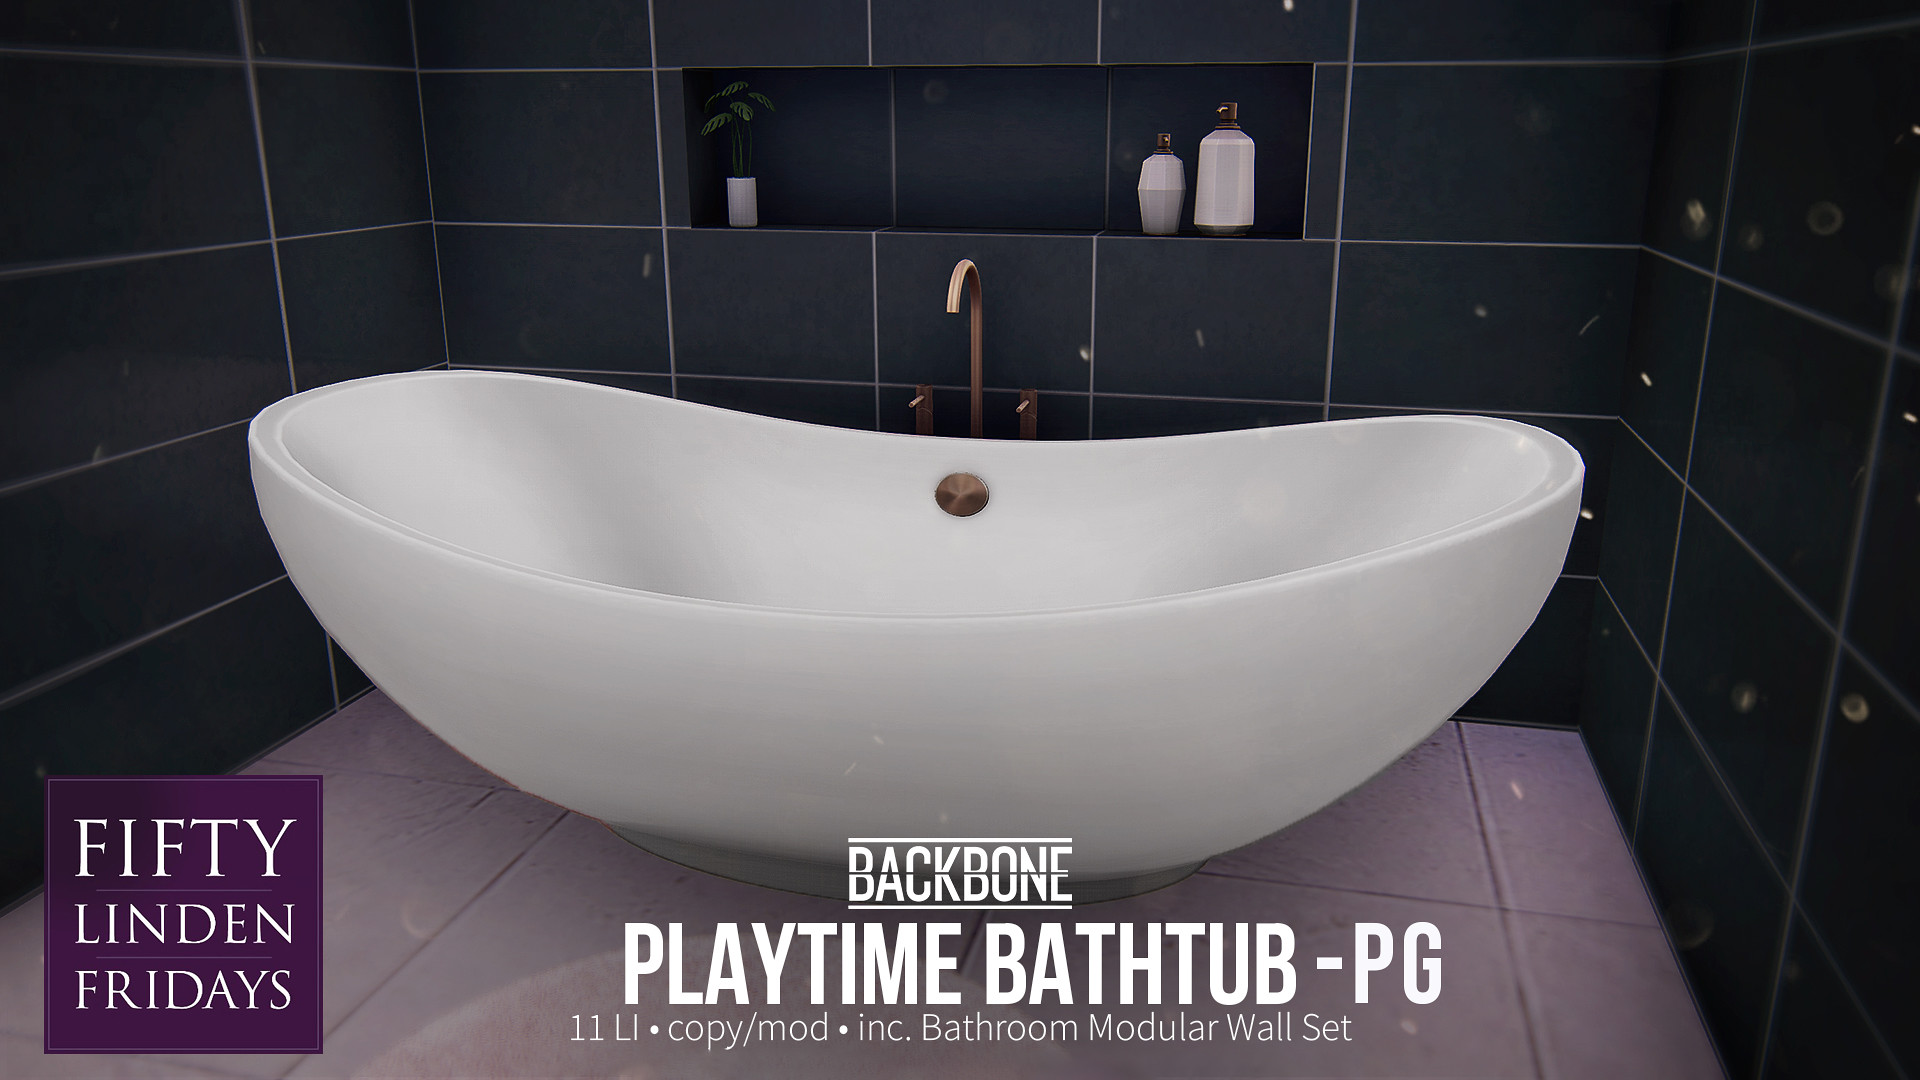 BackBone – Playtime Bathtub PG